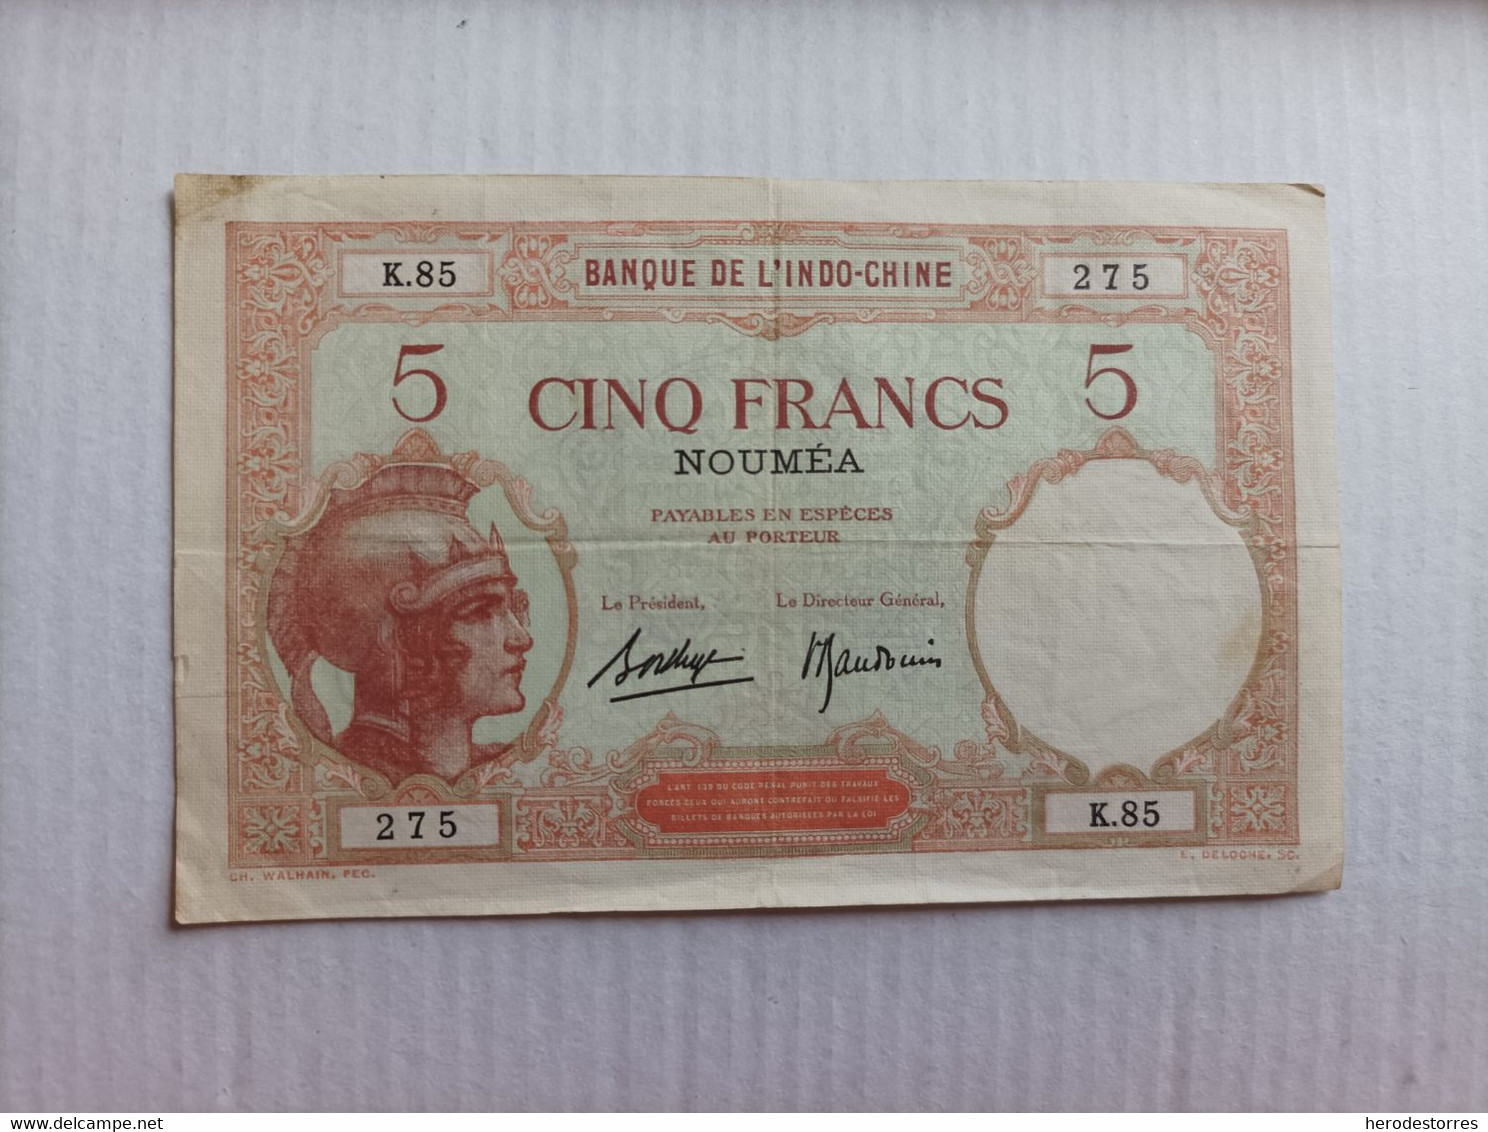 Billete De Indochina (Noumea) Nueva Caledonia De 5 Francs, Año 1920/30 - Indochine